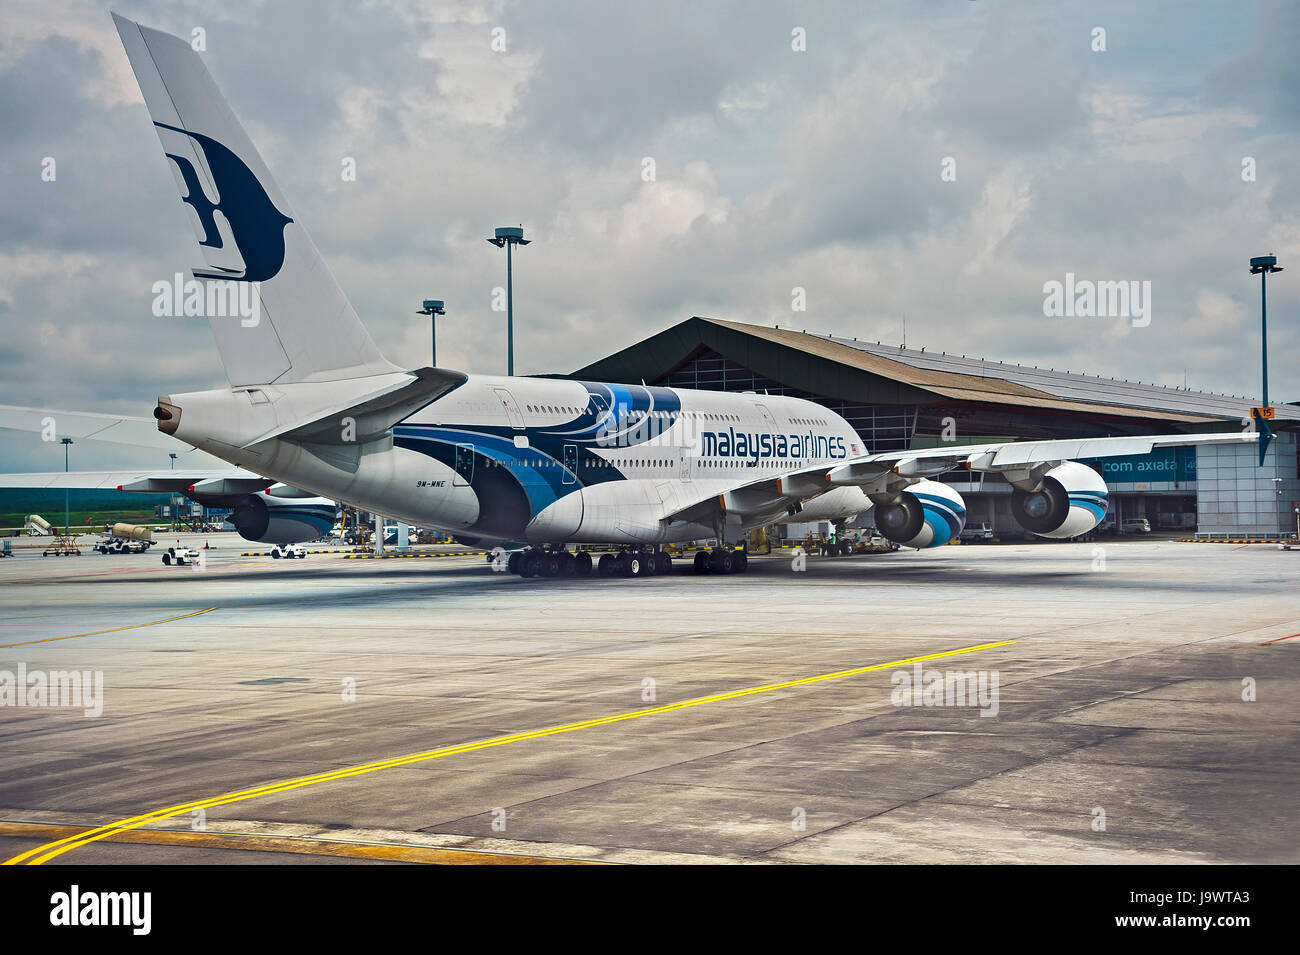 Airbus A380 am Start-und Landebahn, Malaysia Airlines, Soekarno-Hatta international Airport, Jakarta, Indonesien Stockfoto